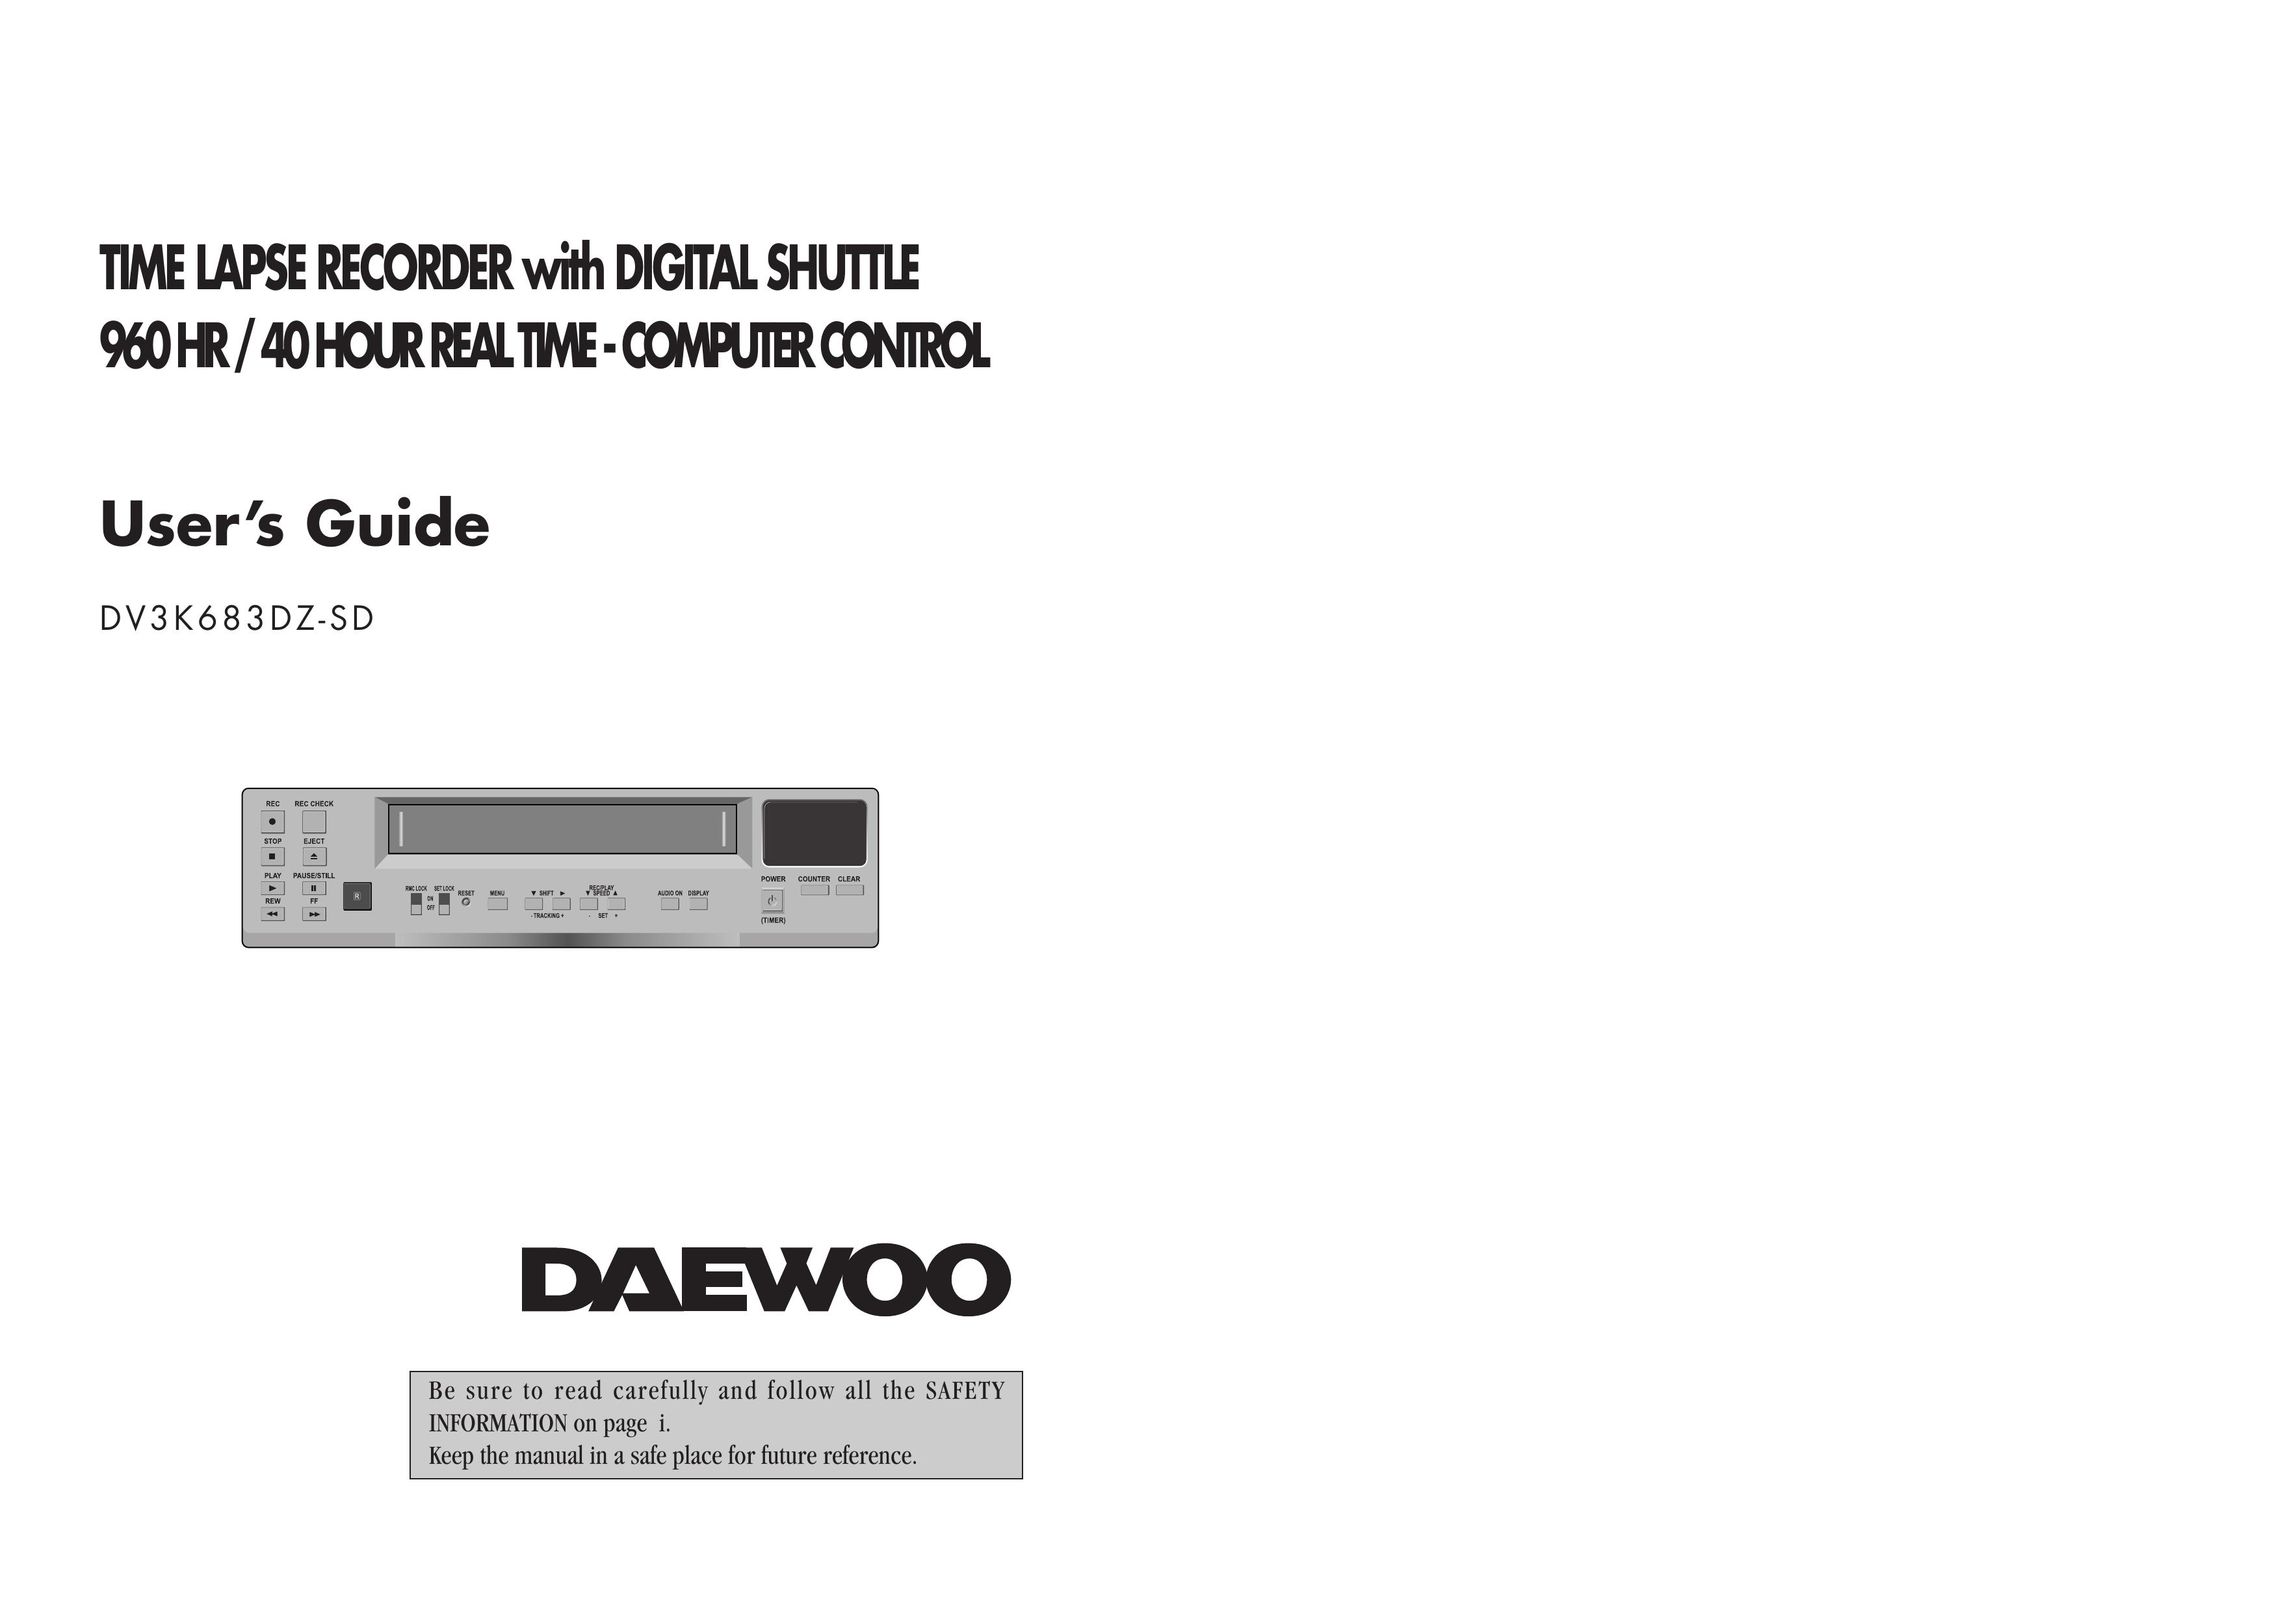 Daewoo DV3K683DZ-SD VCR User Manual